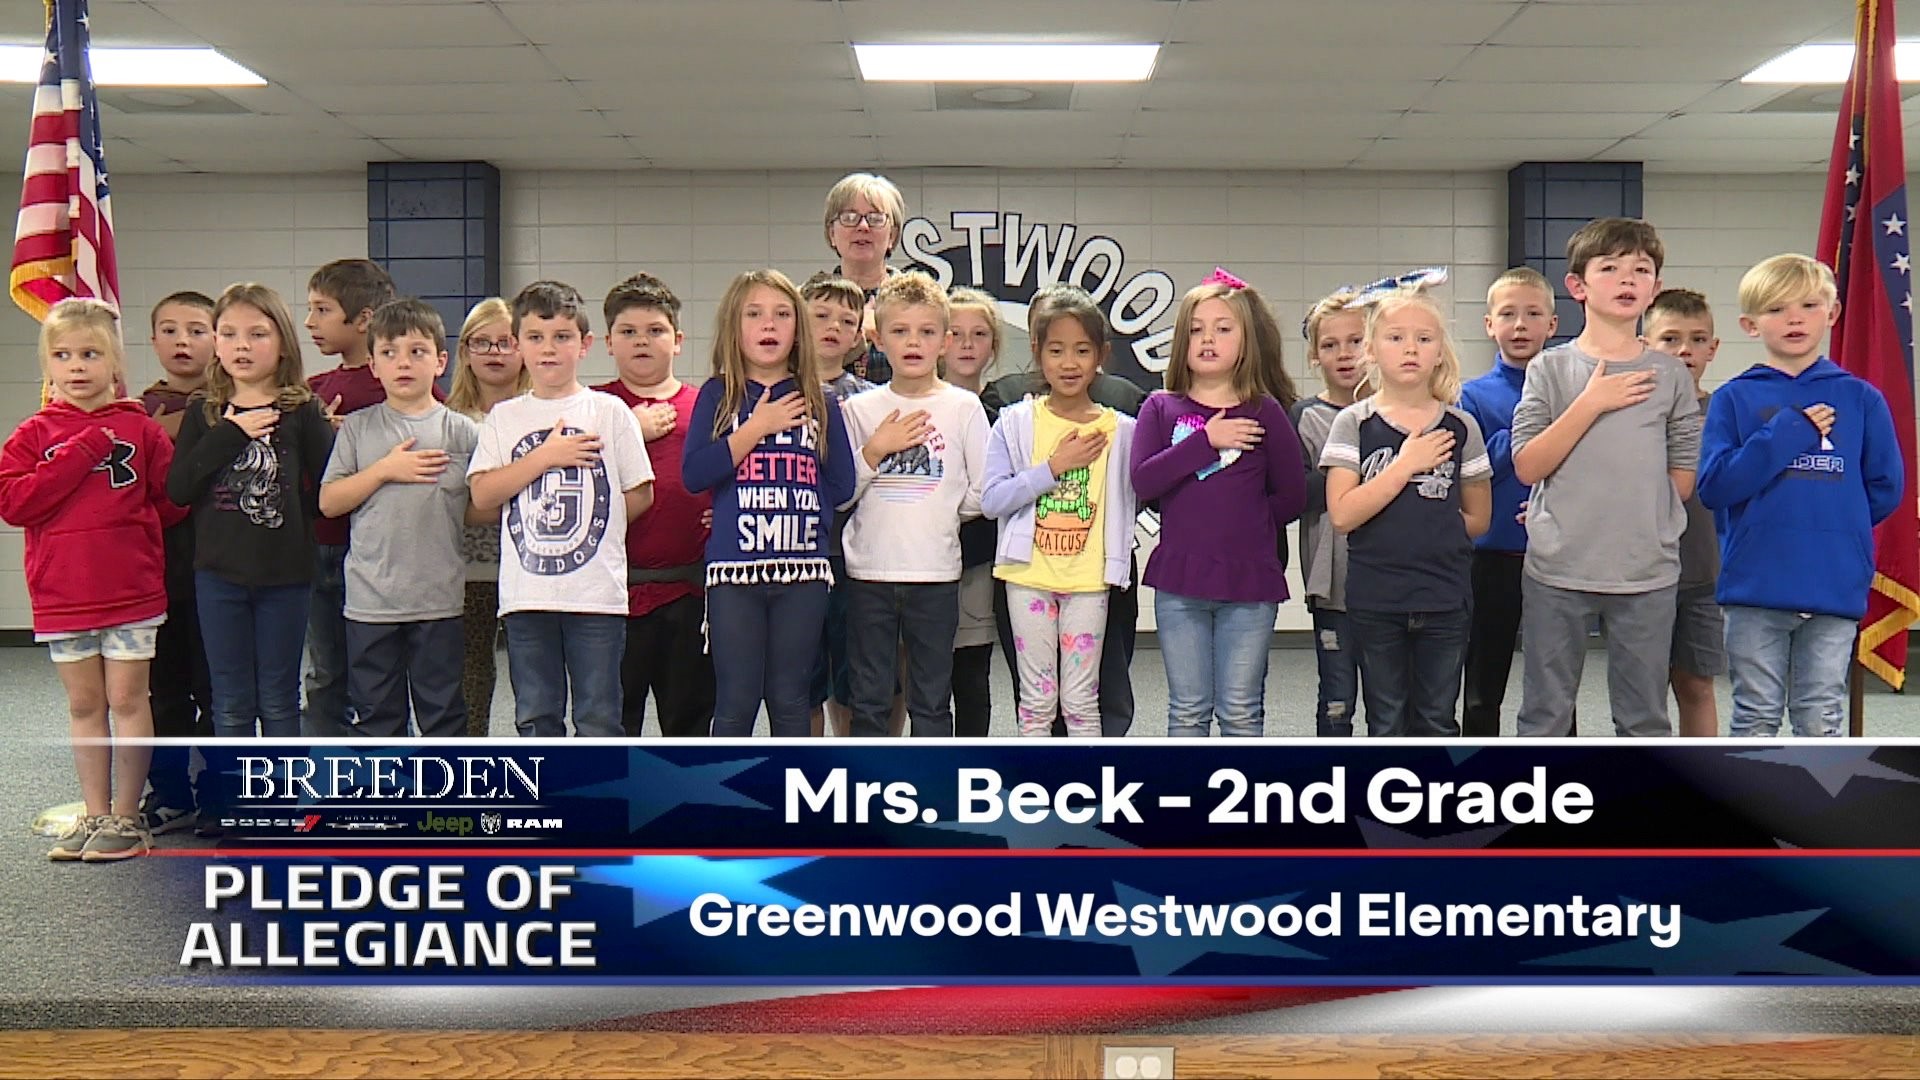 Mrs. Beck 2nd Grade Greenwood Westwood Elementary